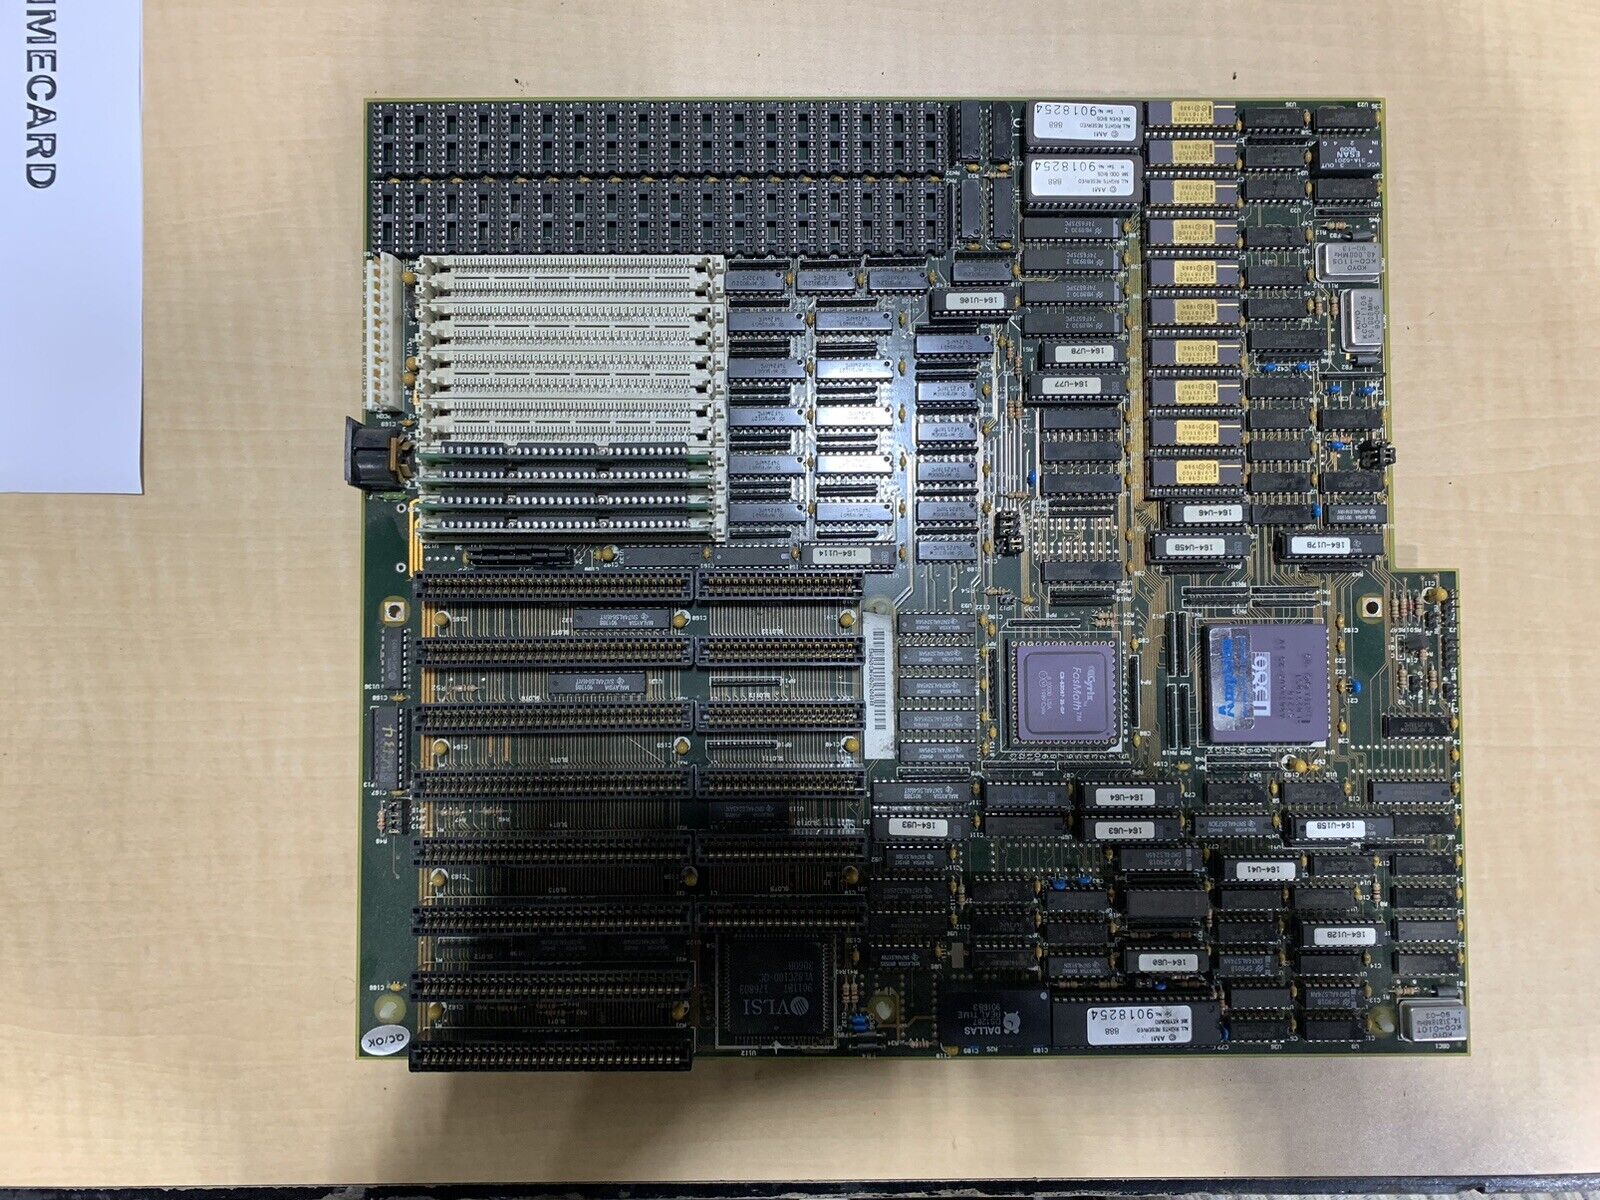 Vintage Aramus 386 33/25 Full Size 386 Motherboard + Intel 386-25 CPU + 1 Mb RAM